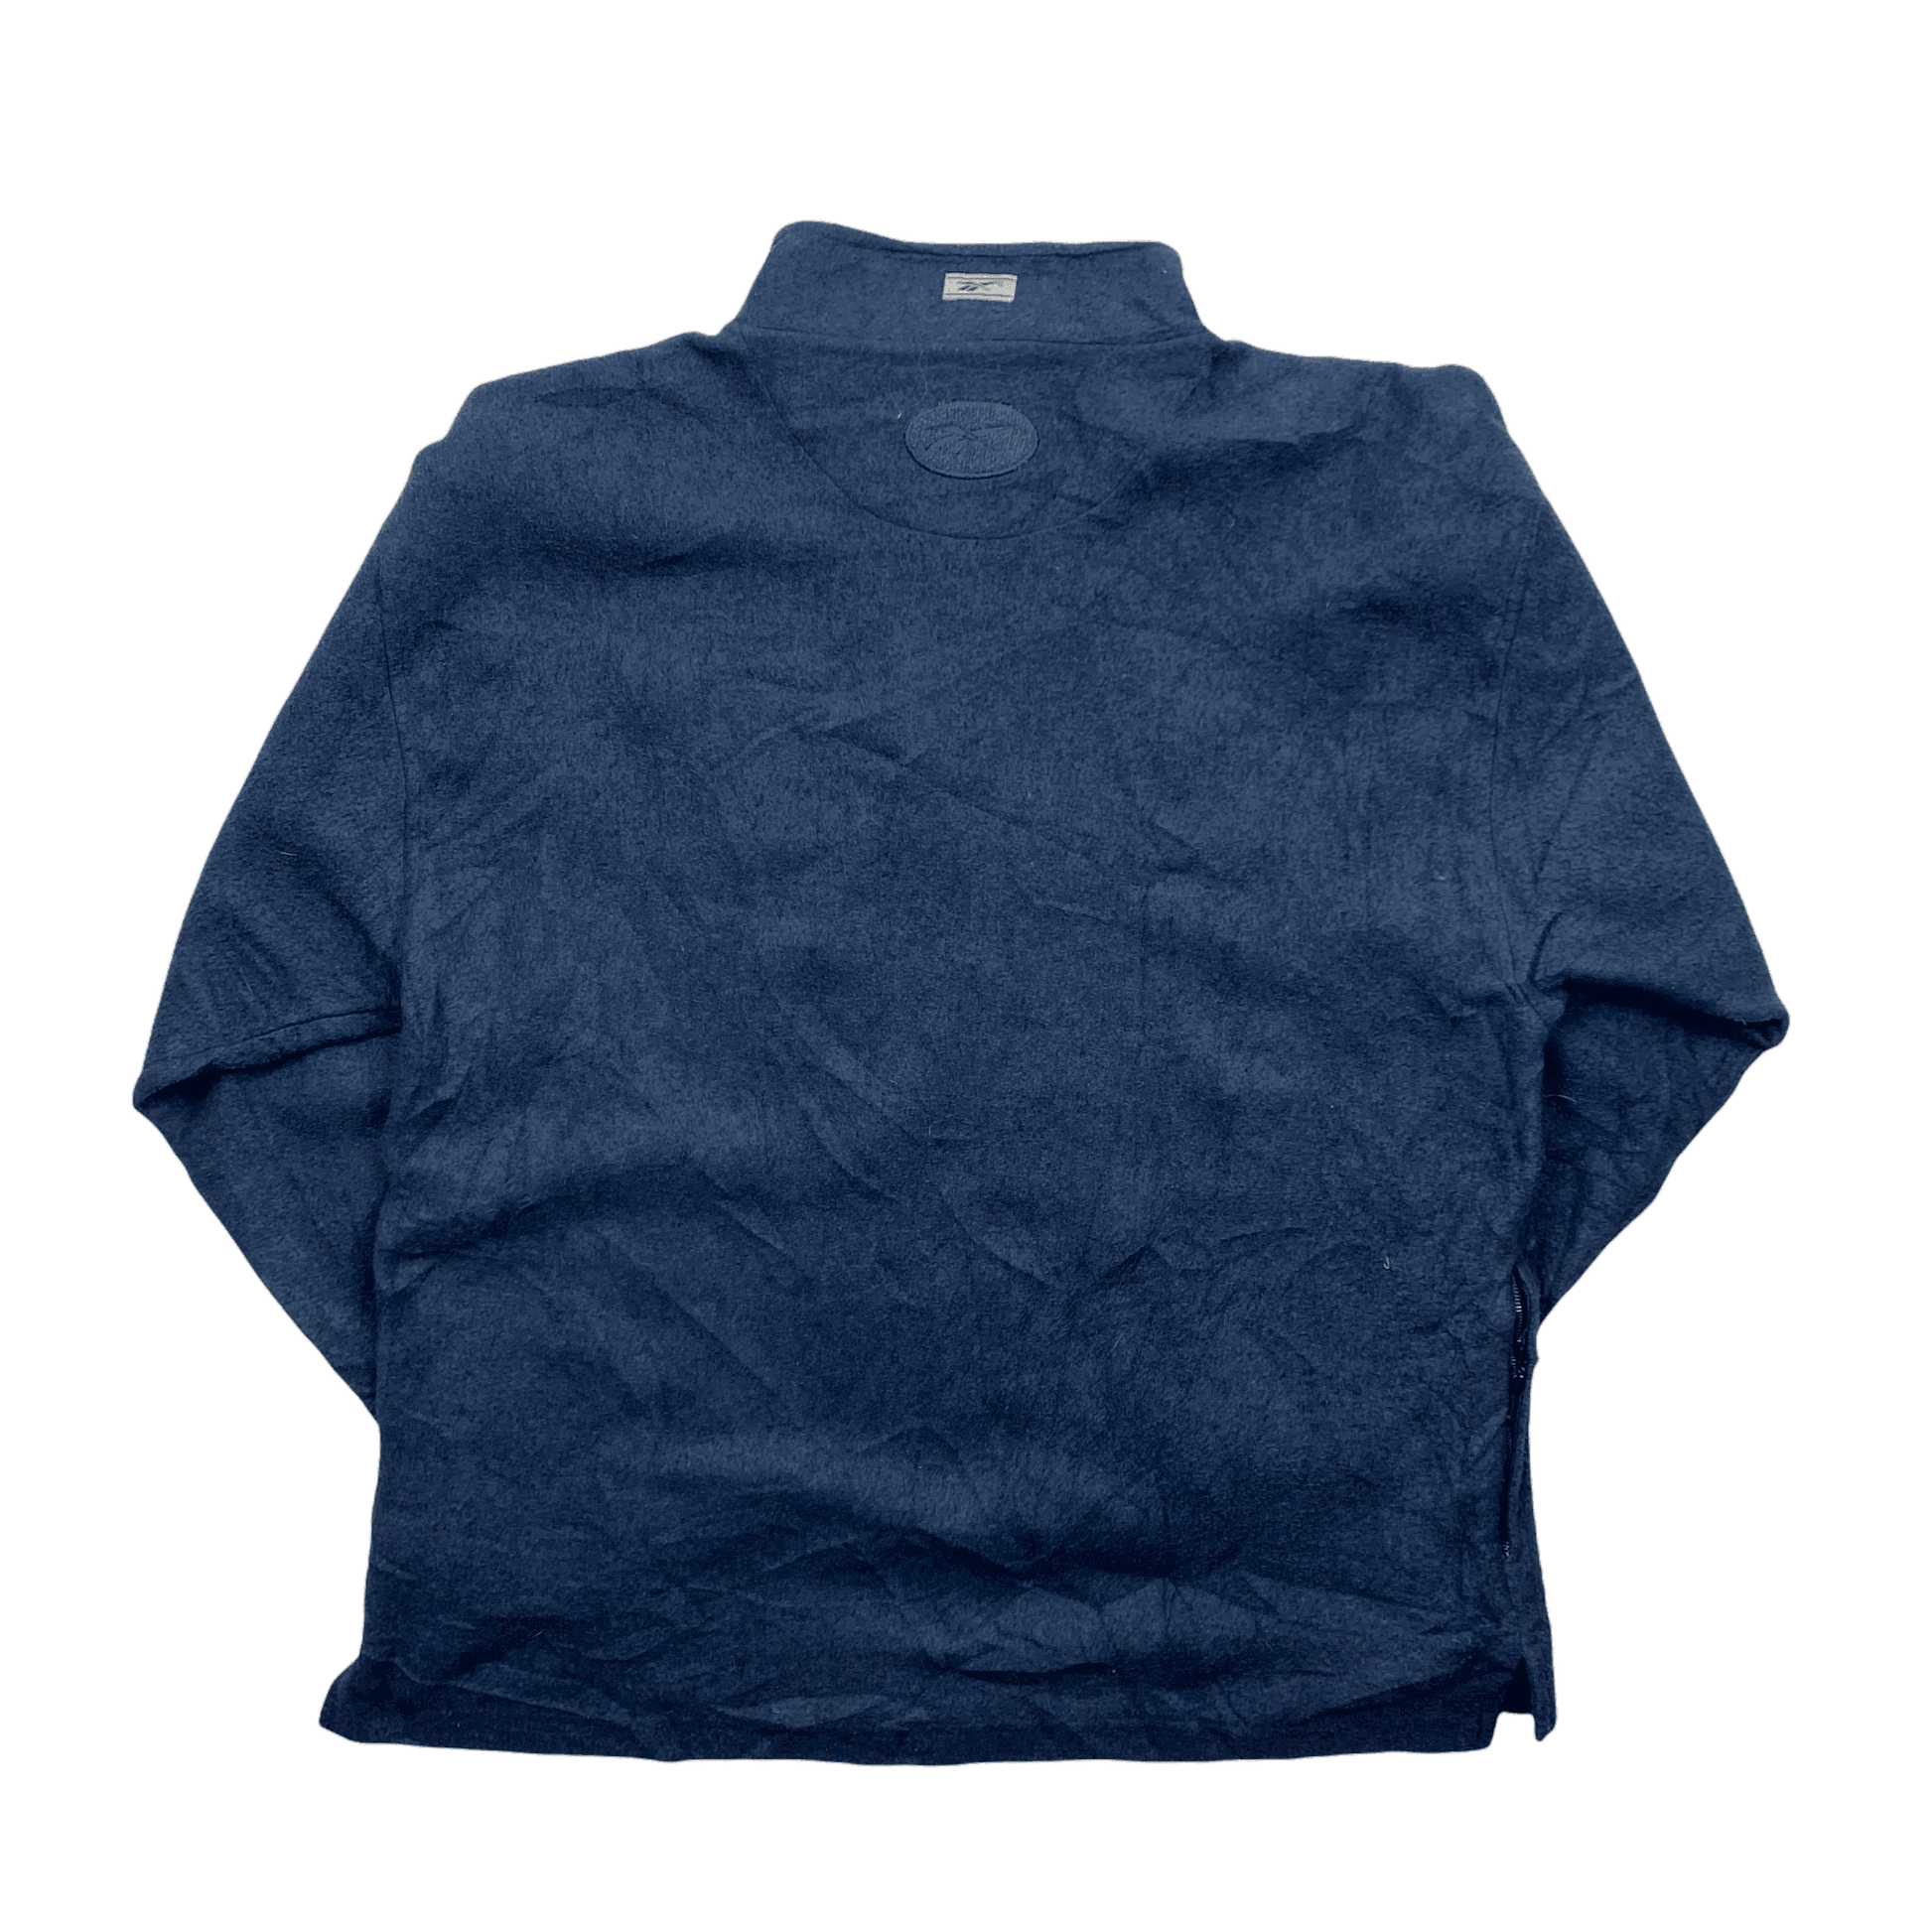 Vintage 90s Blue Reebok Quarter Zip Fleece - Medium (Recommended Size - Extra Large) - The Streetwear Studio